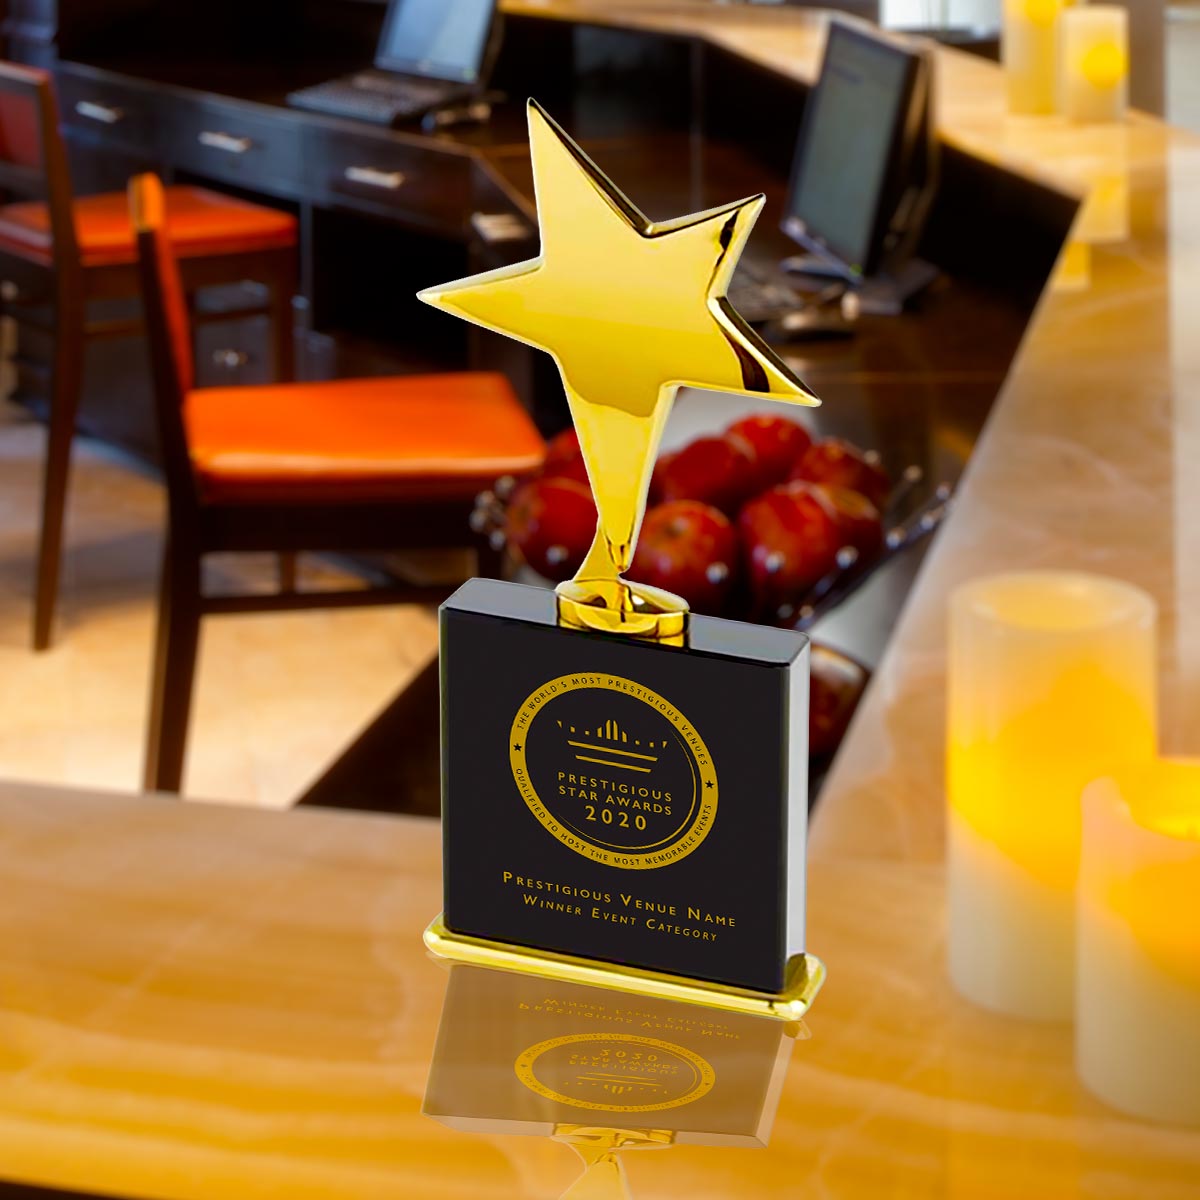 Prestigious Star Awards Trophy at Venue Reception